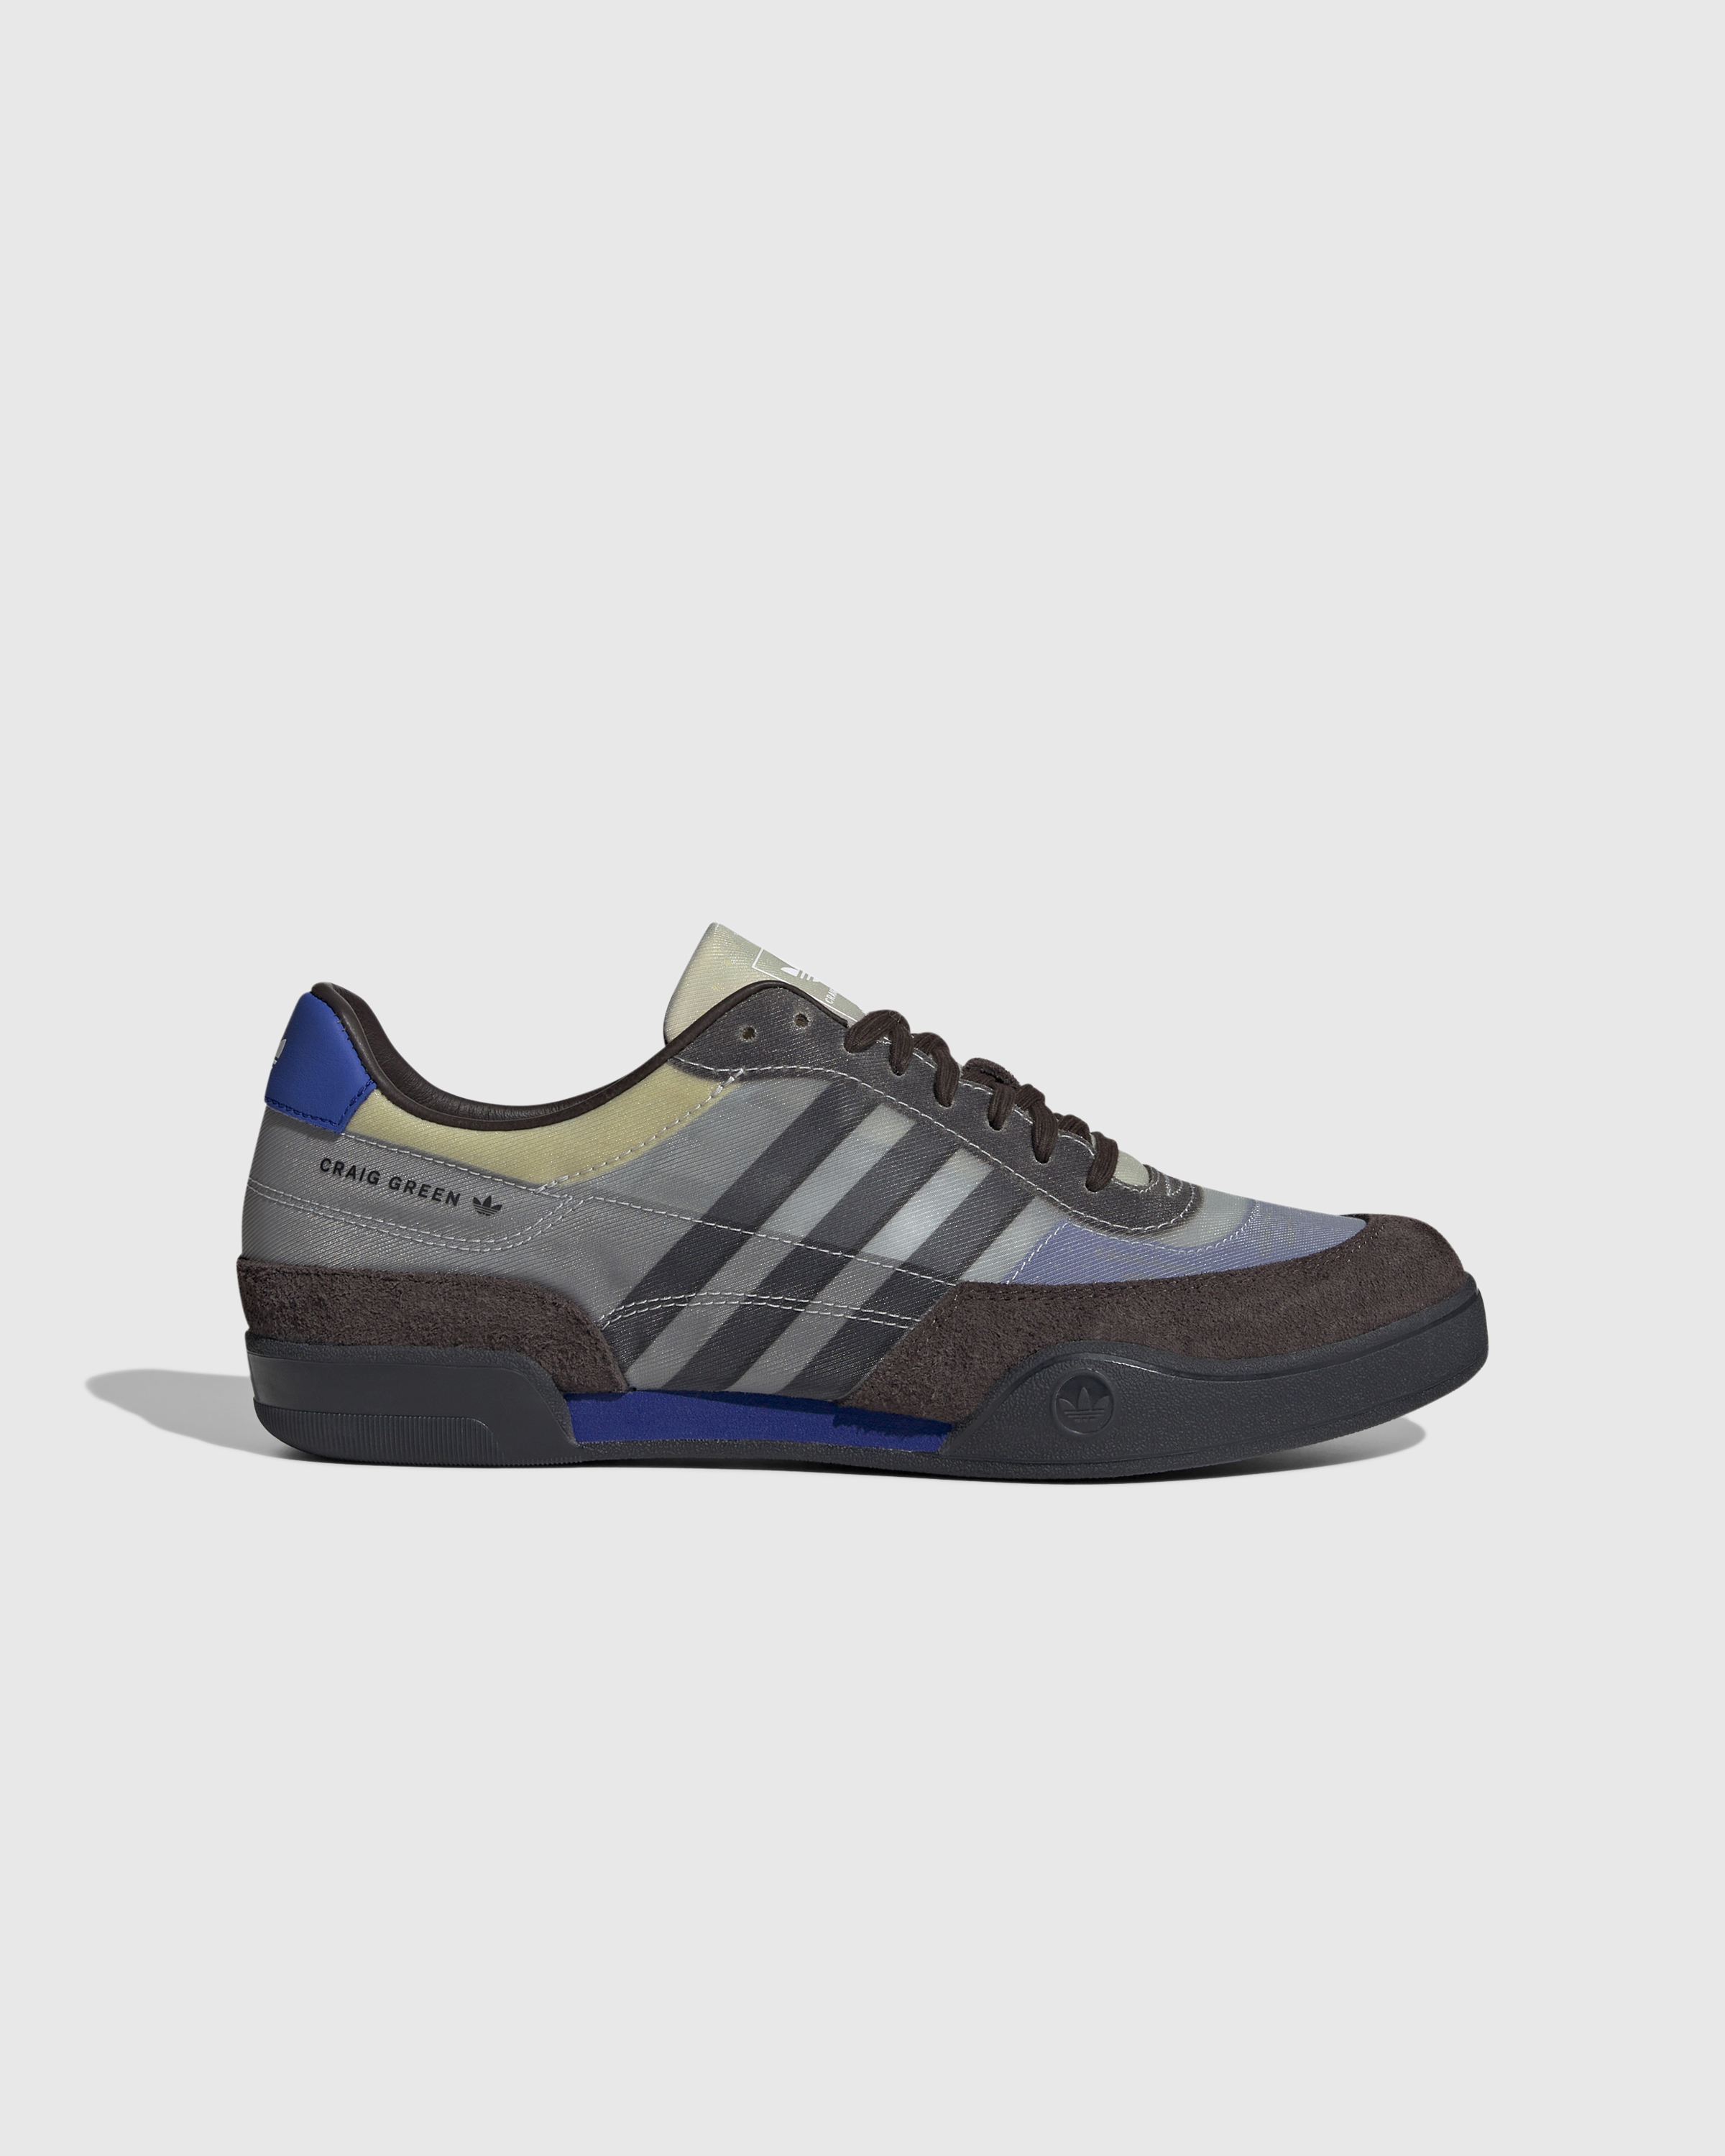 Adidas x Craig Green – Squash Polta Akh Multi/Core White/Gum - Low Top Sneakers - Multi - Image 1